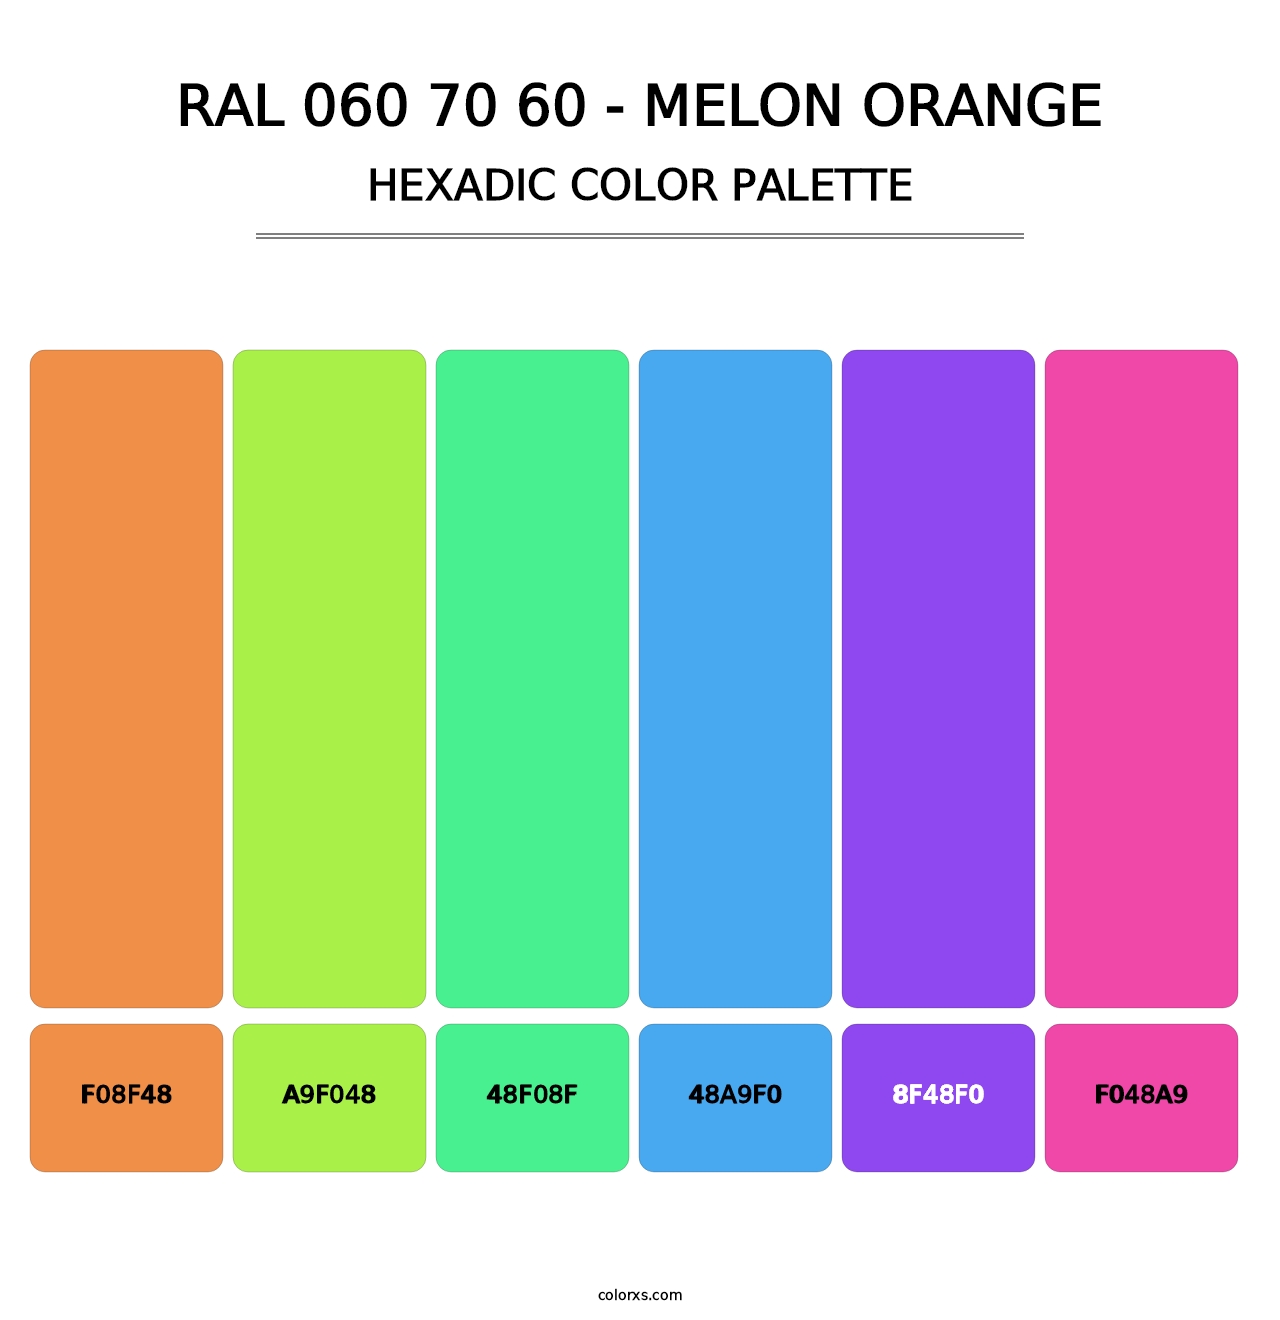 RAL 060 70 60 - Melon Orange - Hexadic Color Palette